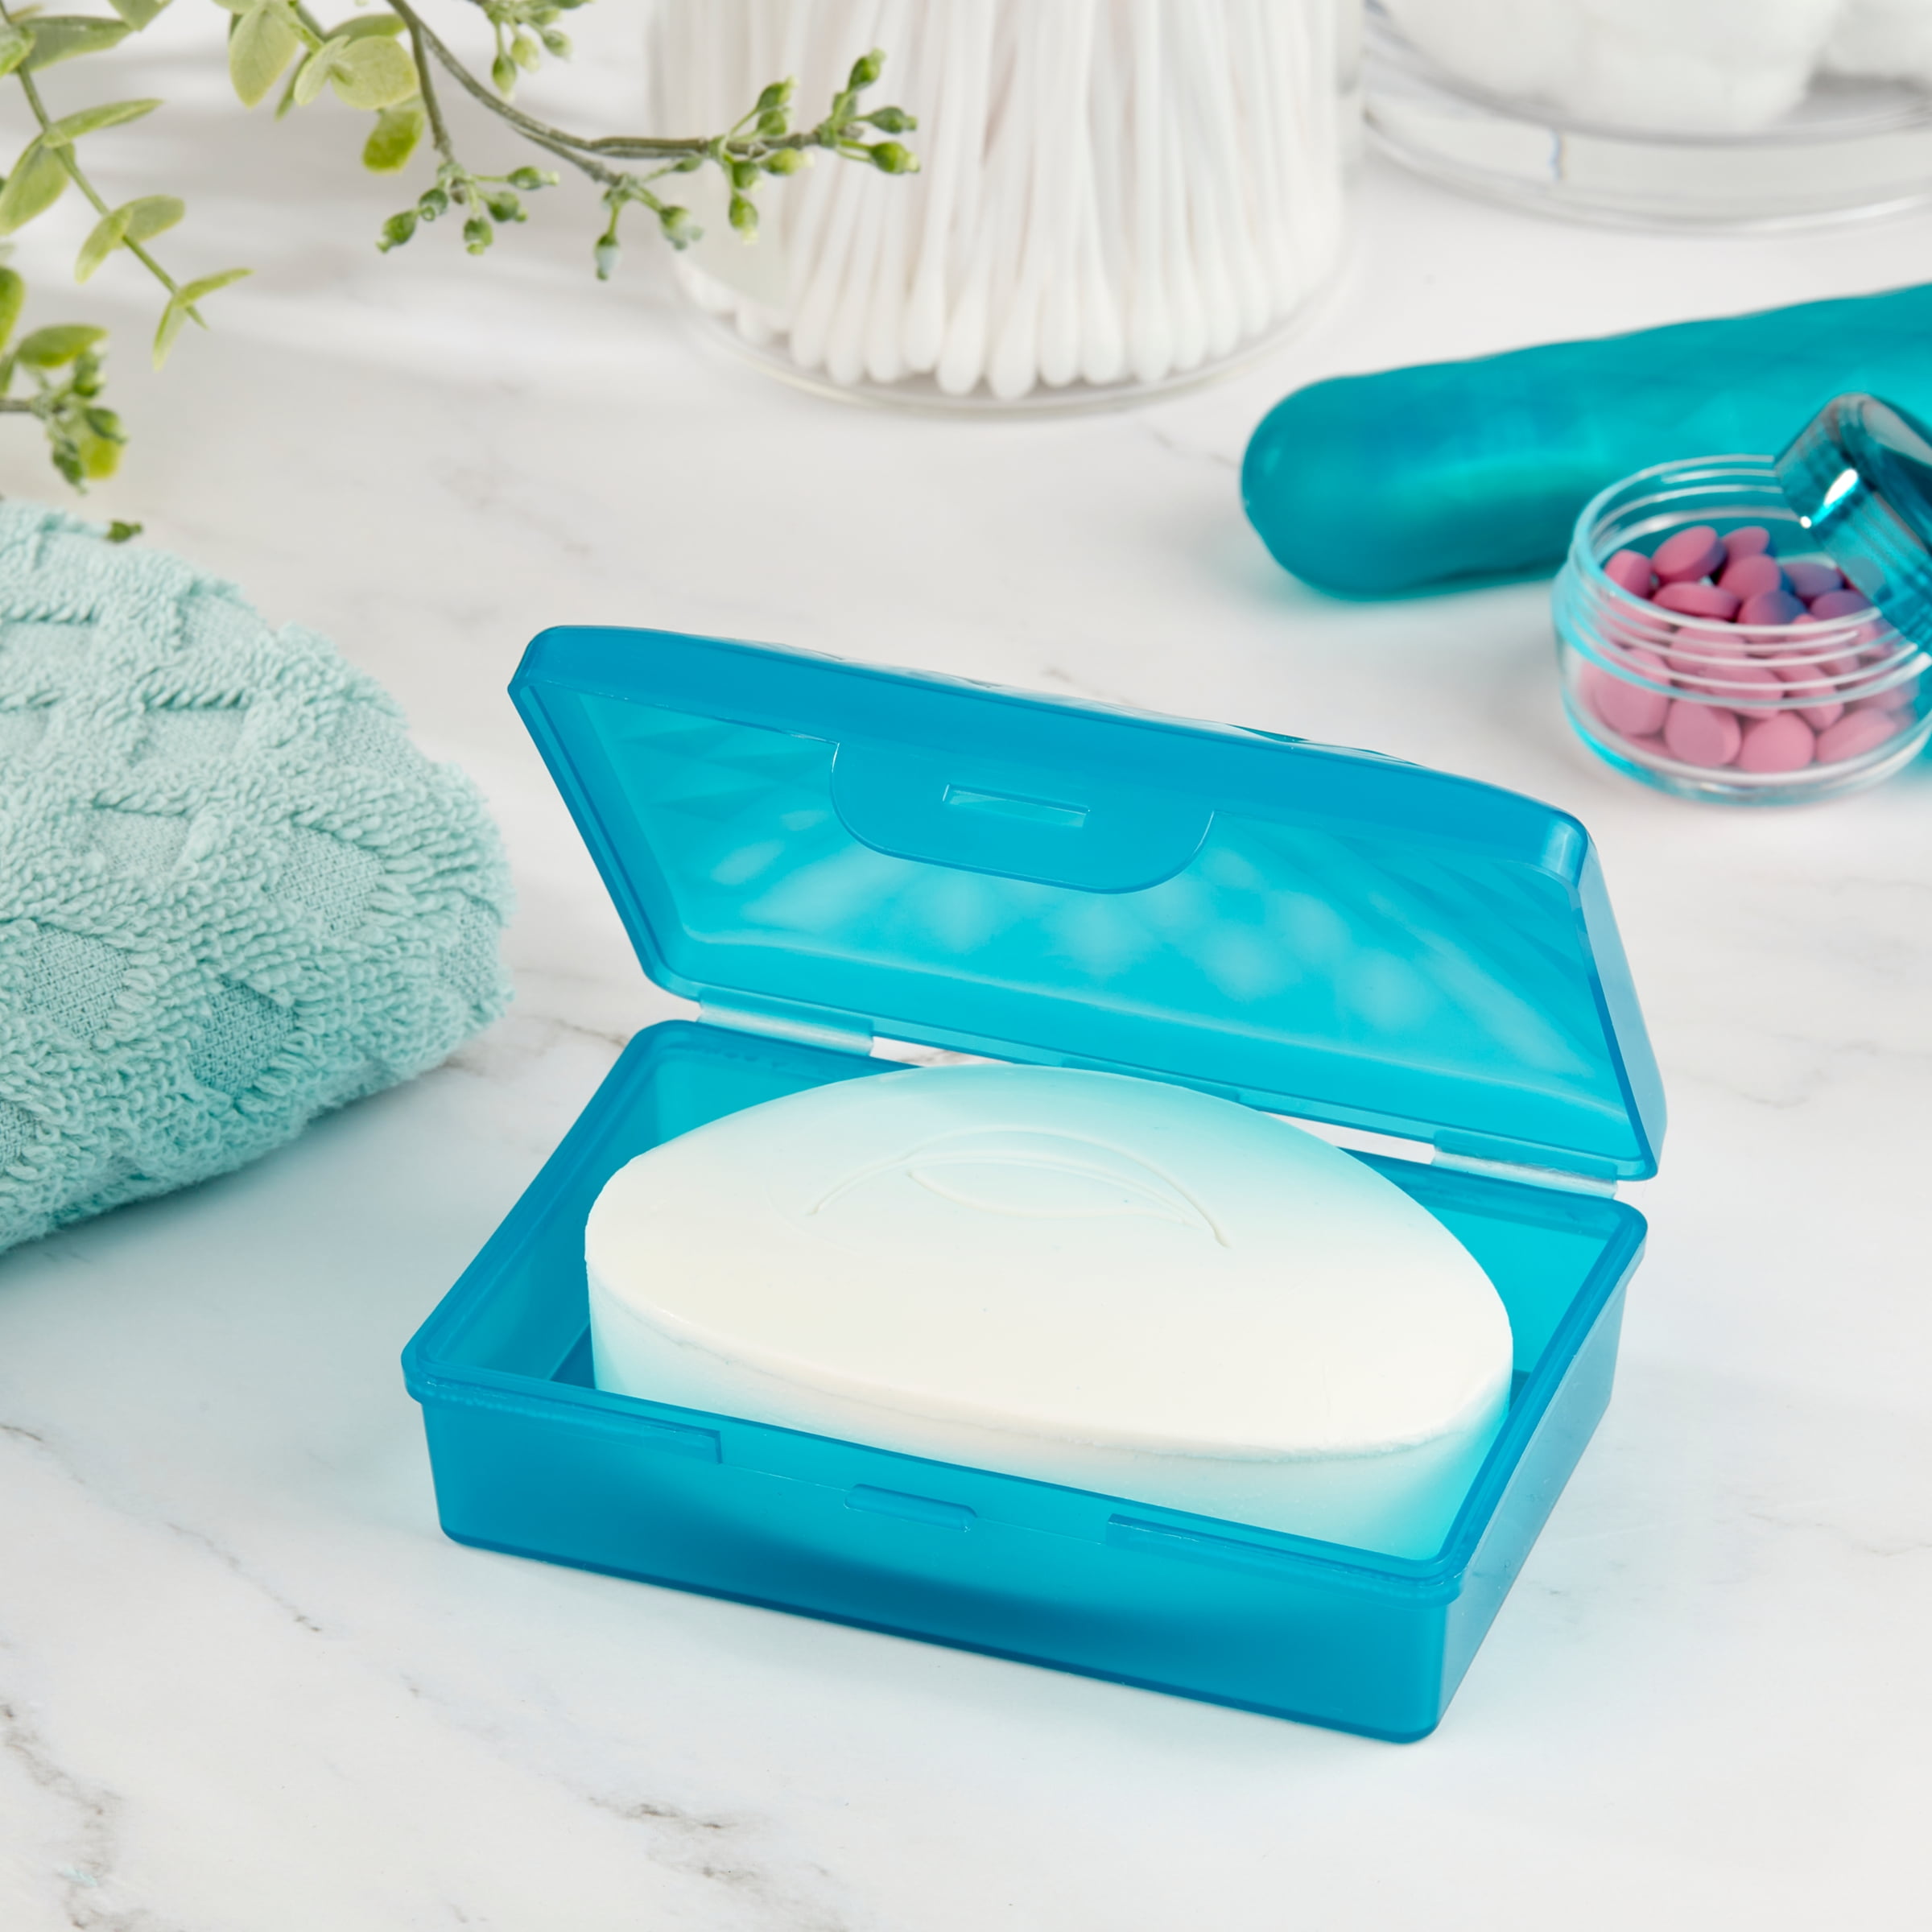 Soap Box Plate Self-draining Soap Dish Bathtub Soap Holder Home Soap Container 